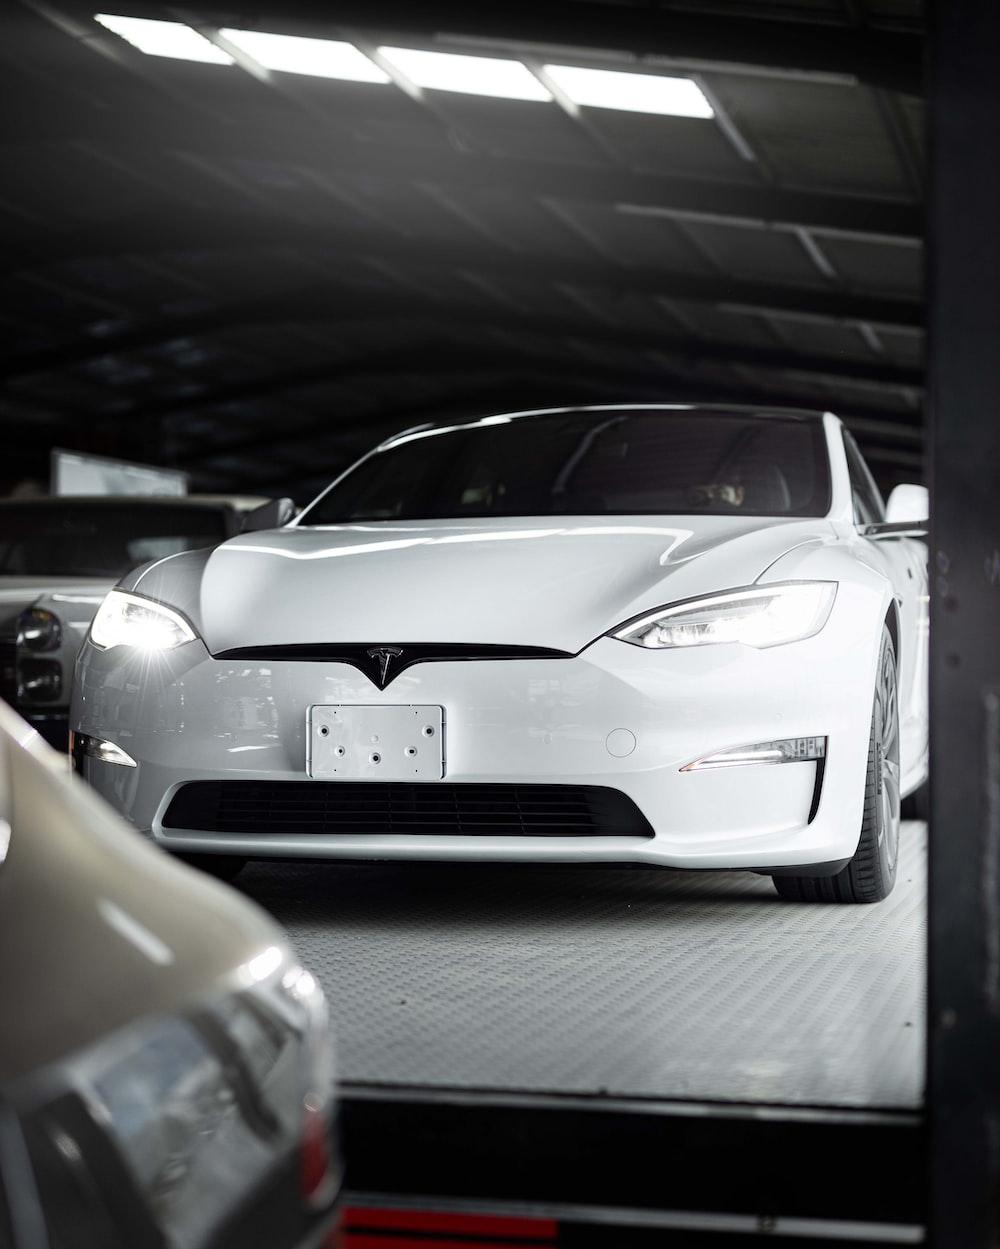 Tesla Model S Plaid Pictures Image